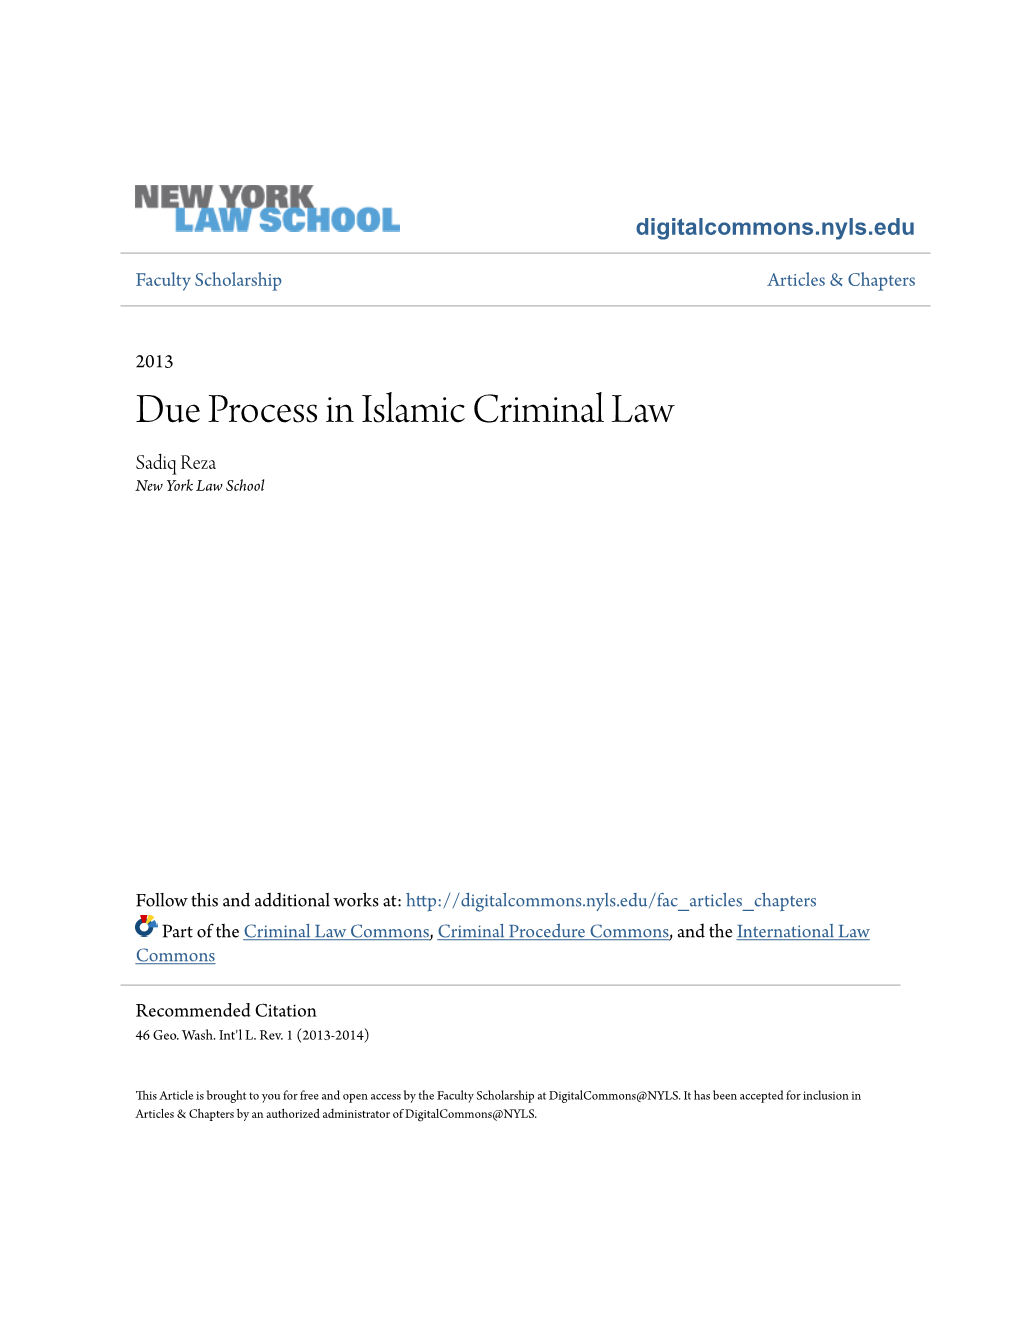 Due Process in Islamic Criminal Law Sadiq Reza New York Law School